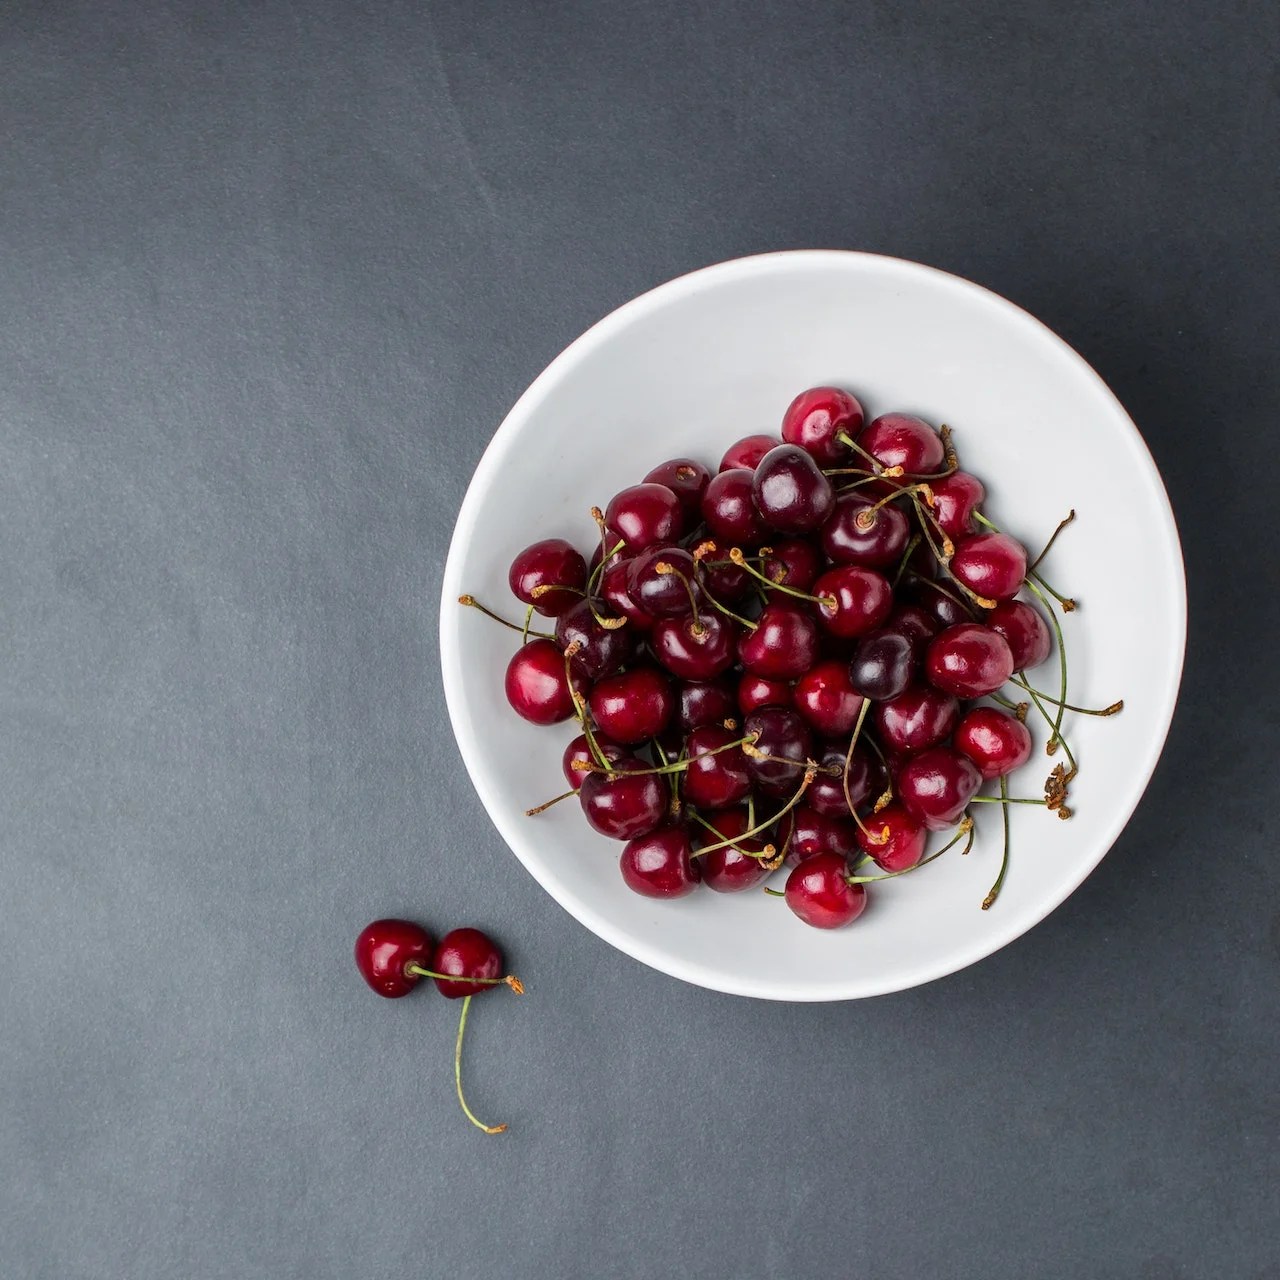 The benefits of cherries